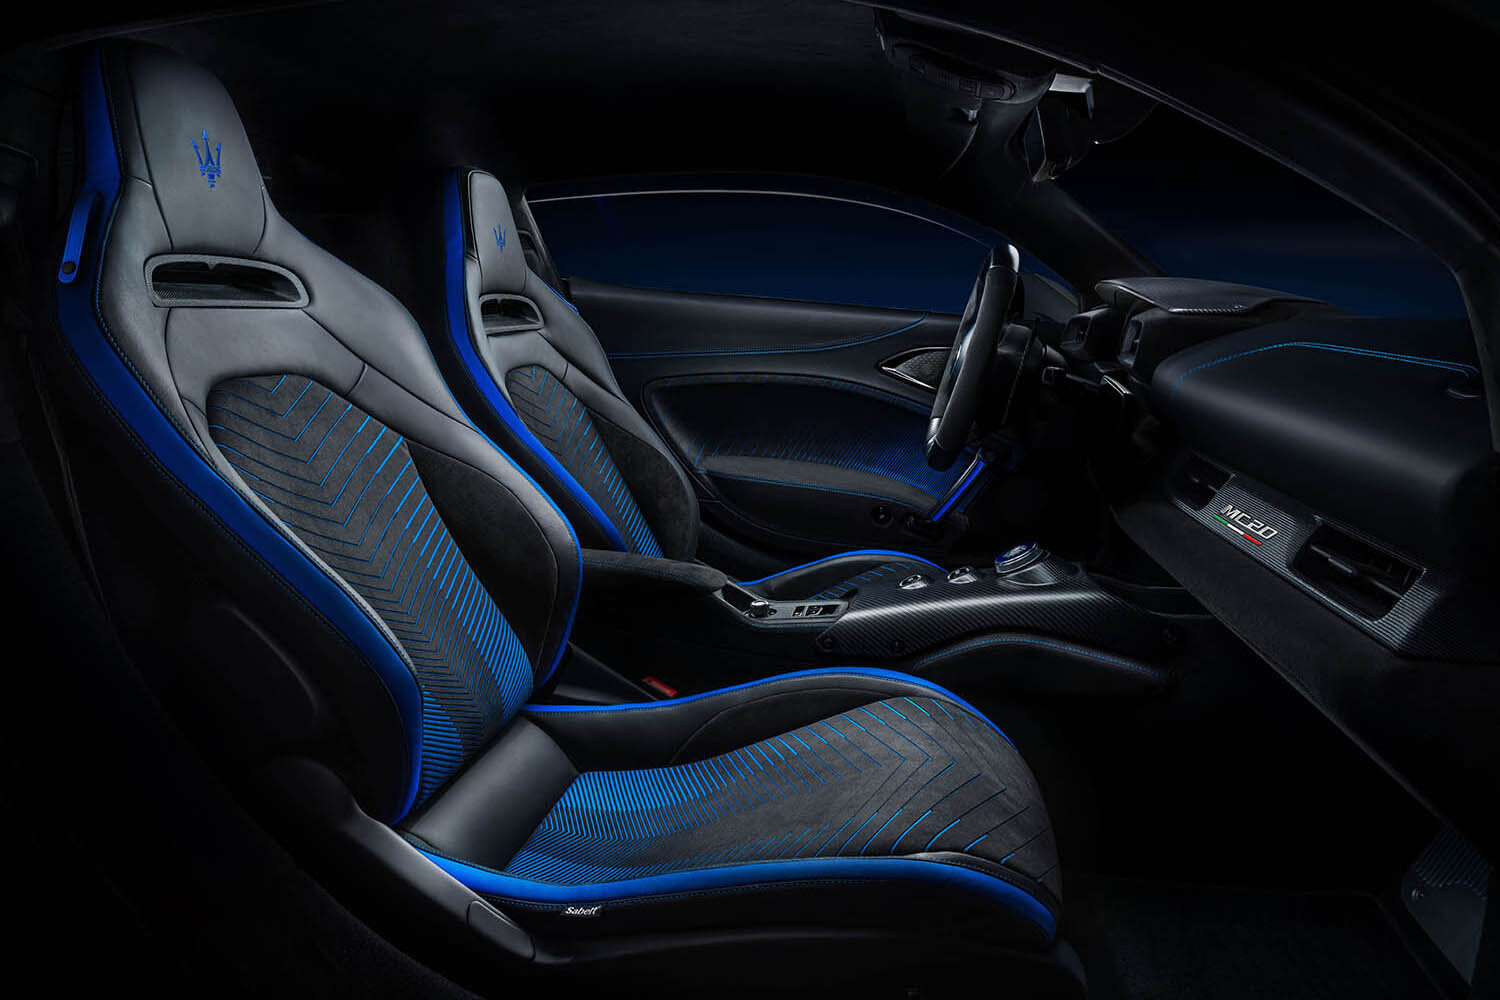 40_Maserati_MC20_interior.jpg